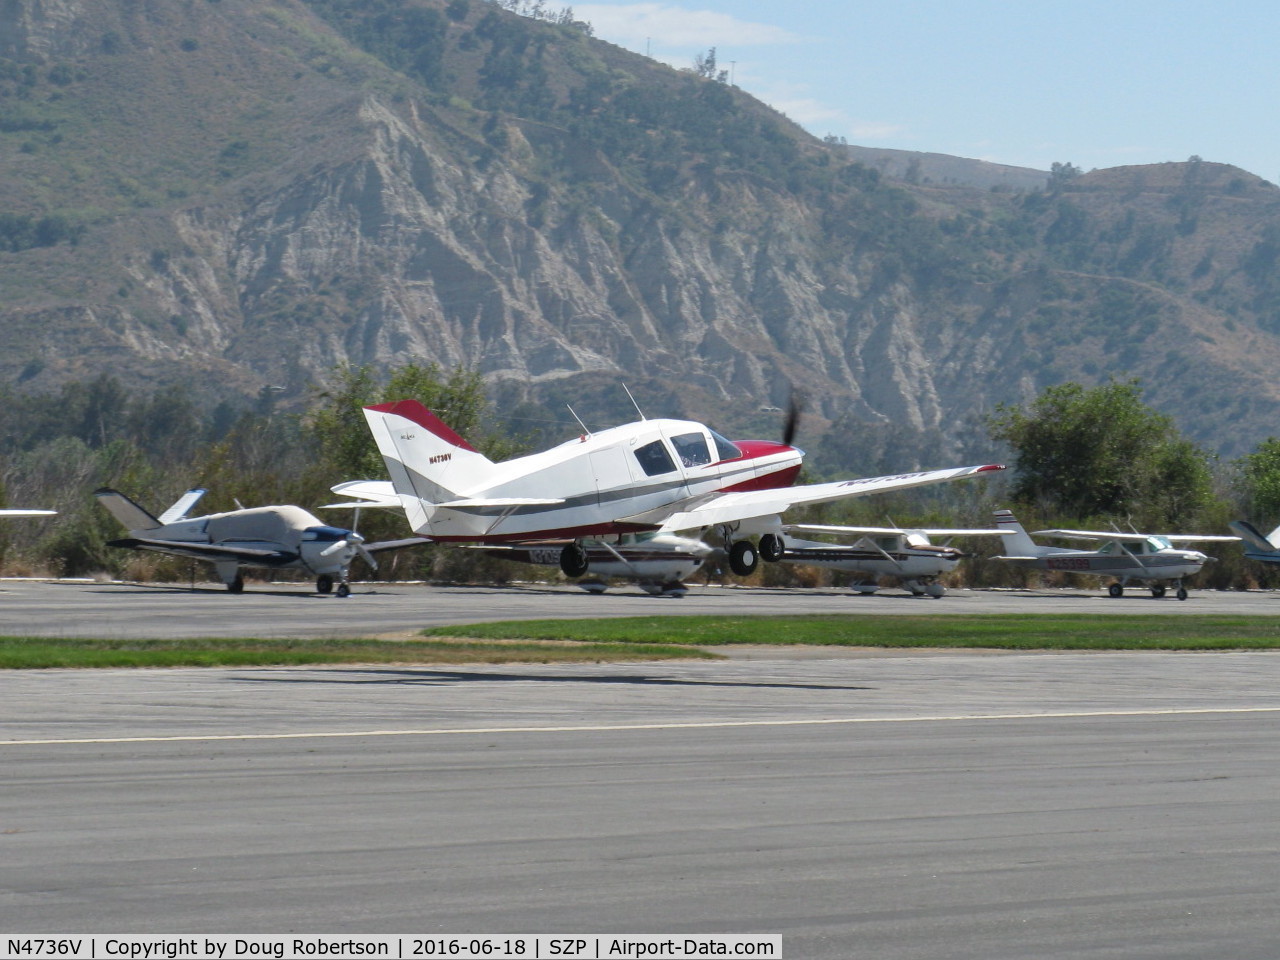 N4736V, 1967 Bellanca 17-30 C/N 30067, 1967 Bellanca 17-30 VIKING, Continental IO-520 300/285 Hp, takeoff climb Rwy 22